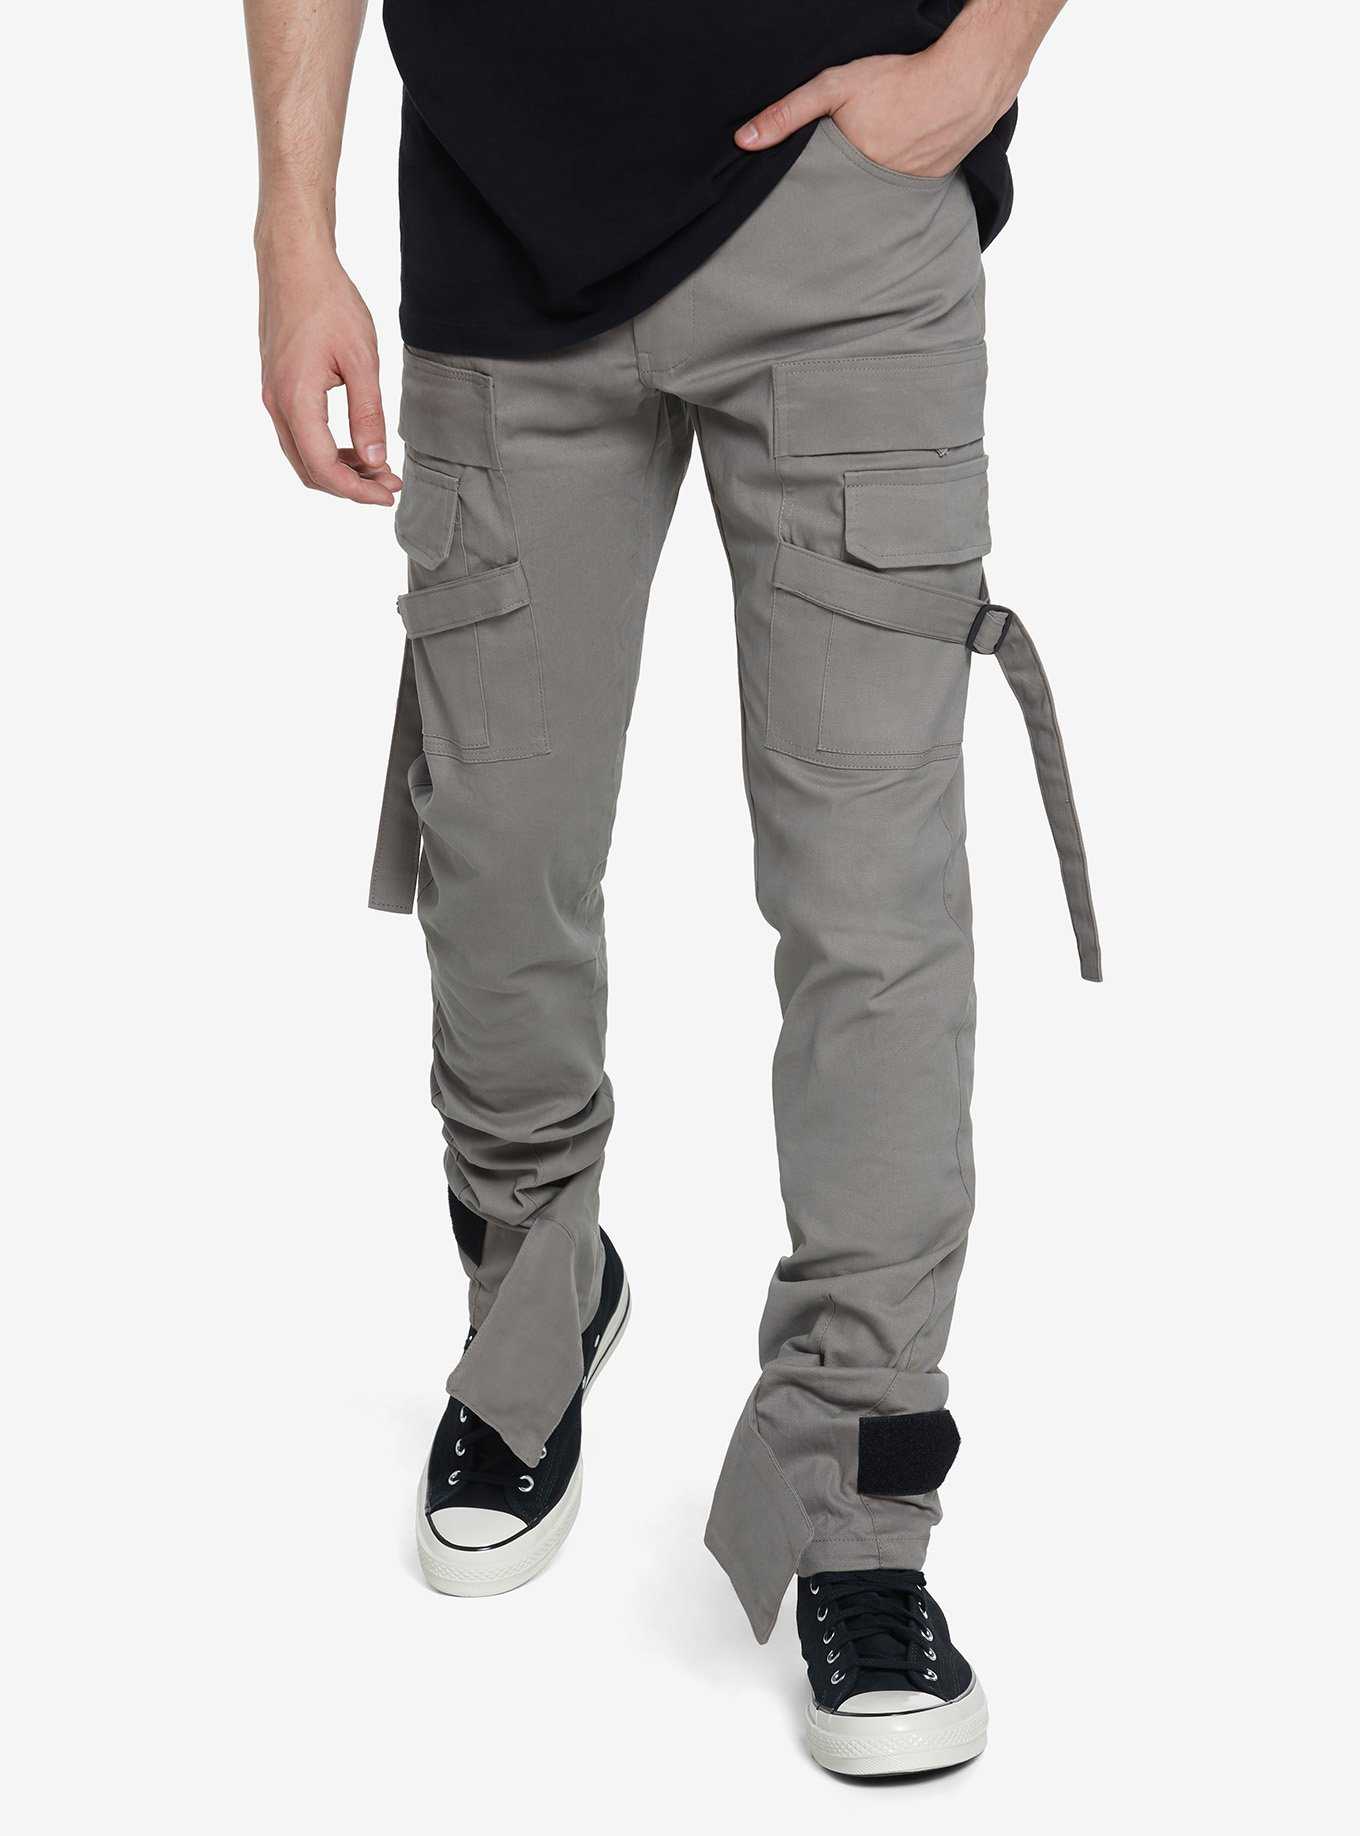 Grey Strap Cargo Pants, , hi-res